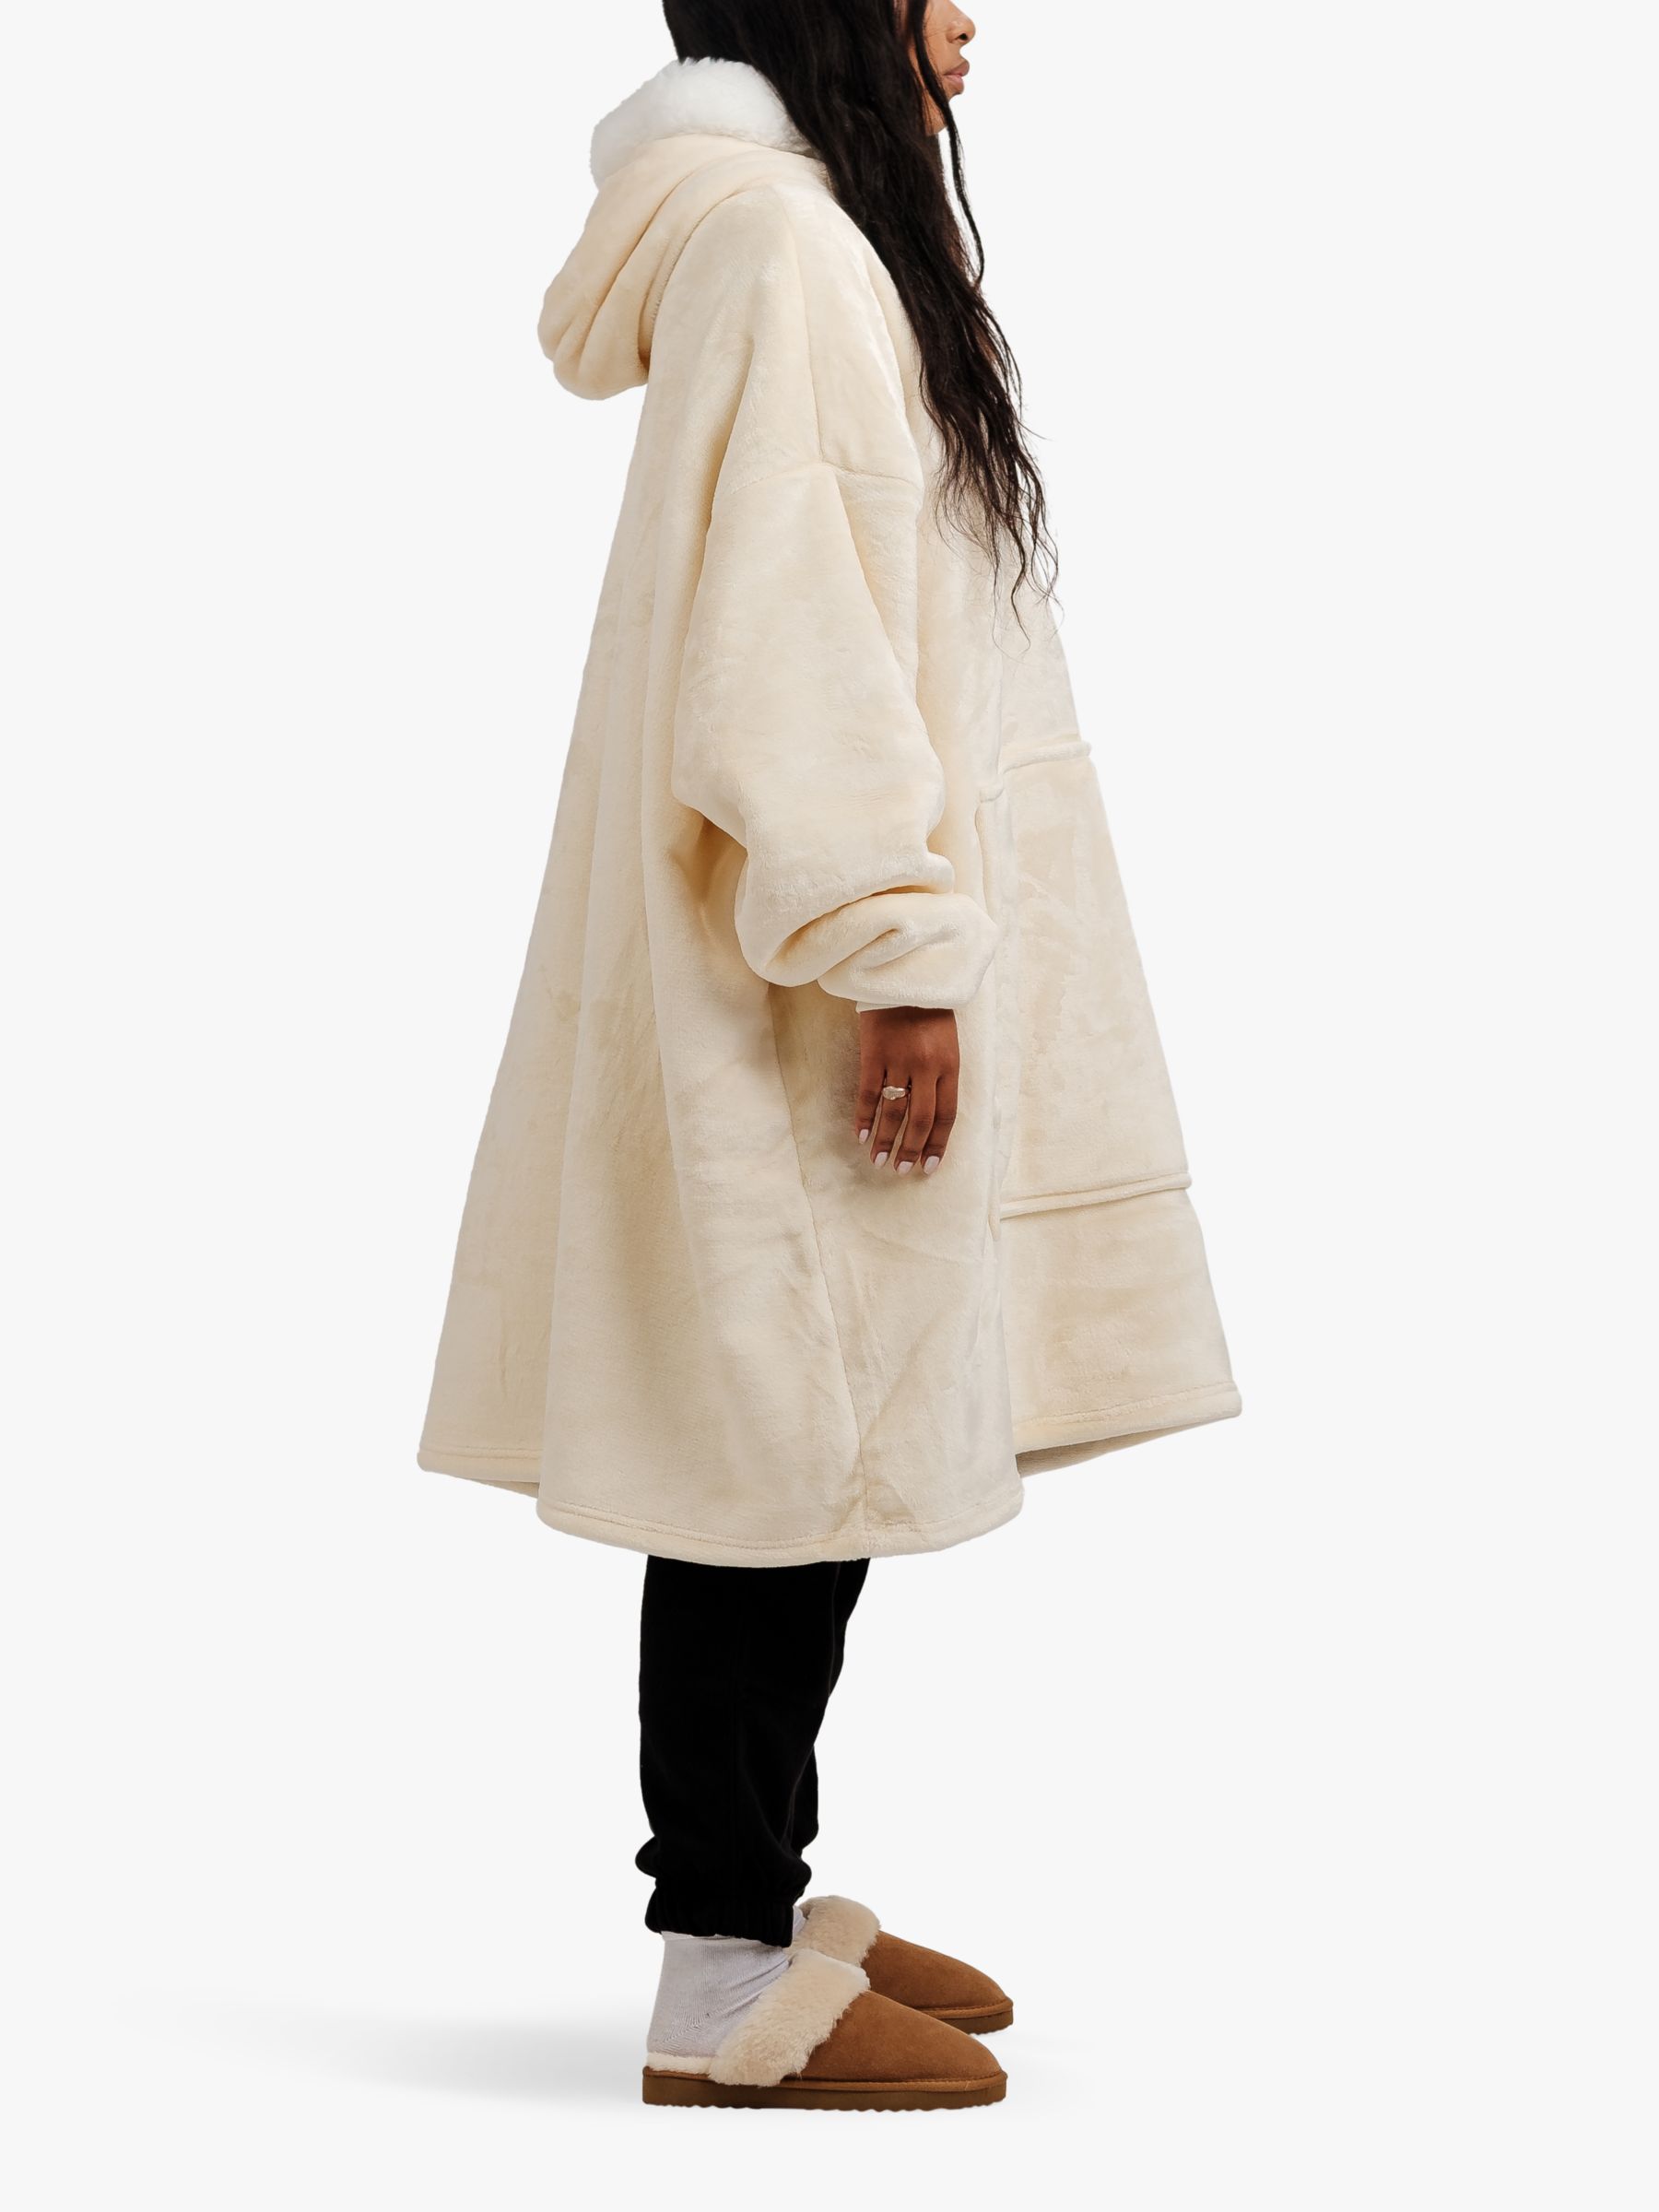 Ony Unisex Faux Fur Collar Sherpa Lined Fleece Hoodie Blanket, Cream/White, One Size